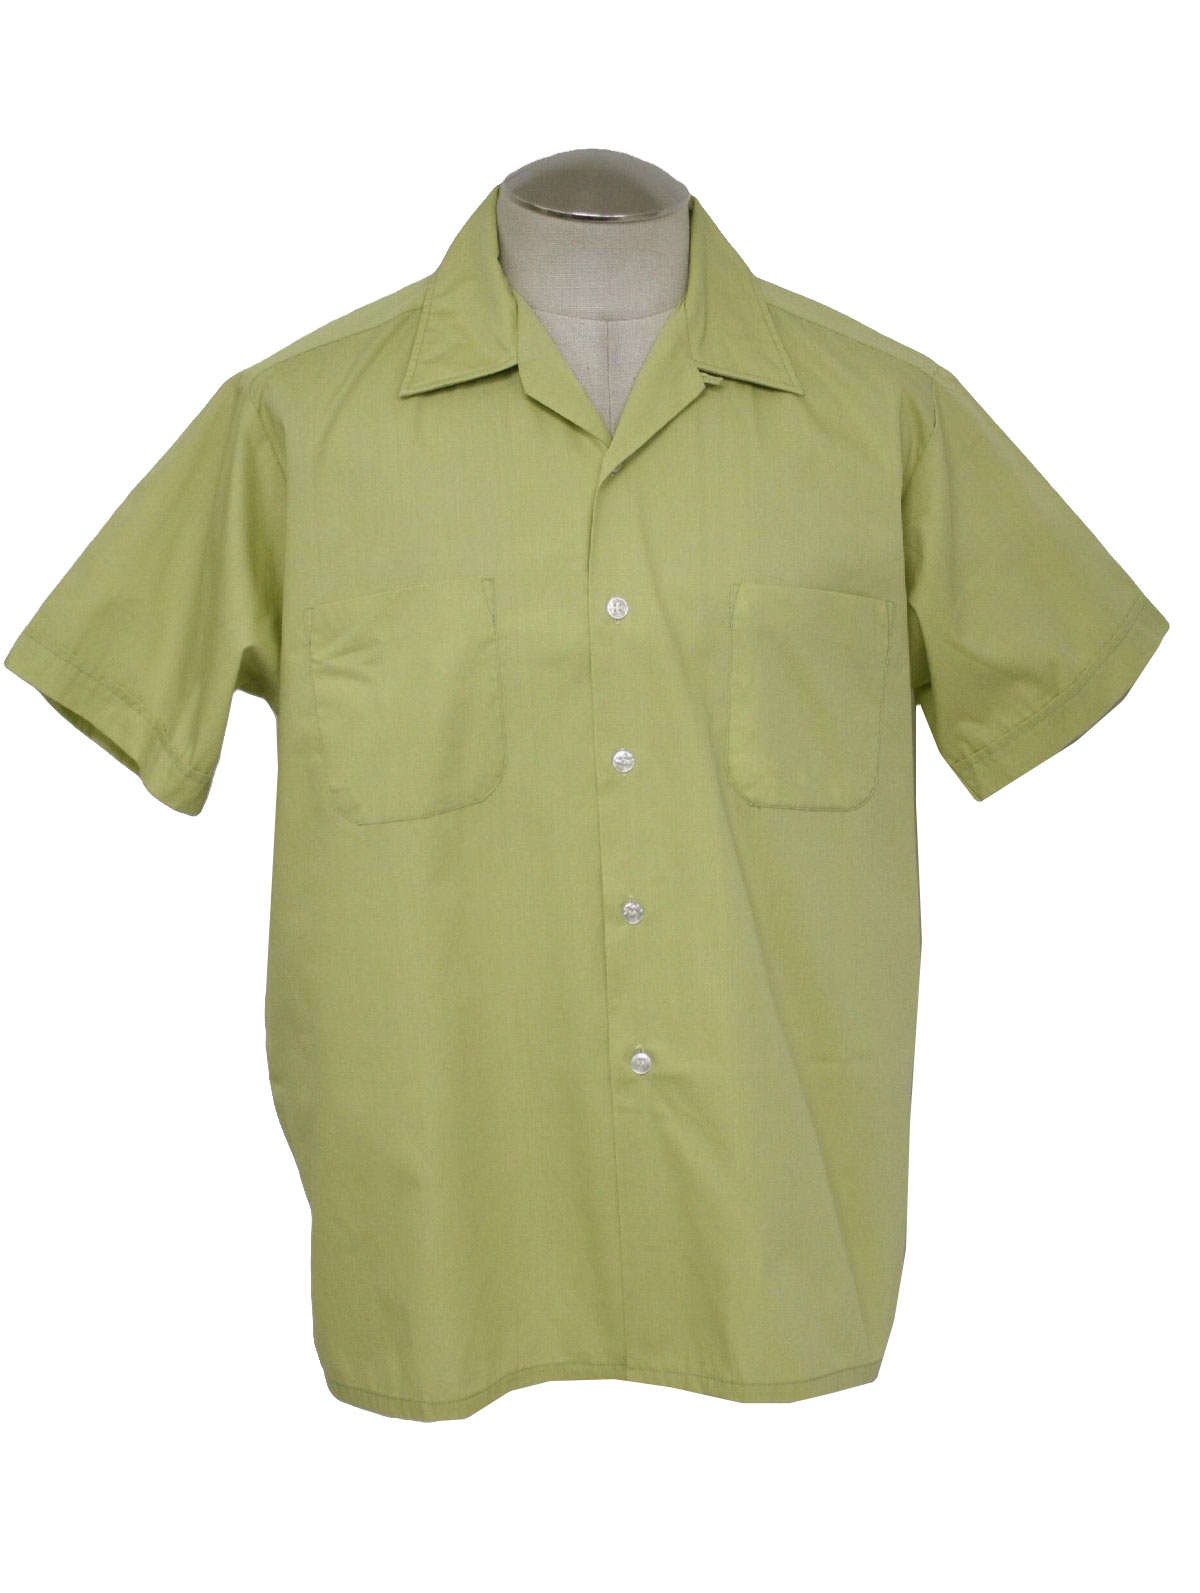 Vintage 1960's Shirt: 60s -Grants Menswear Permanent Press- Mens pale ...